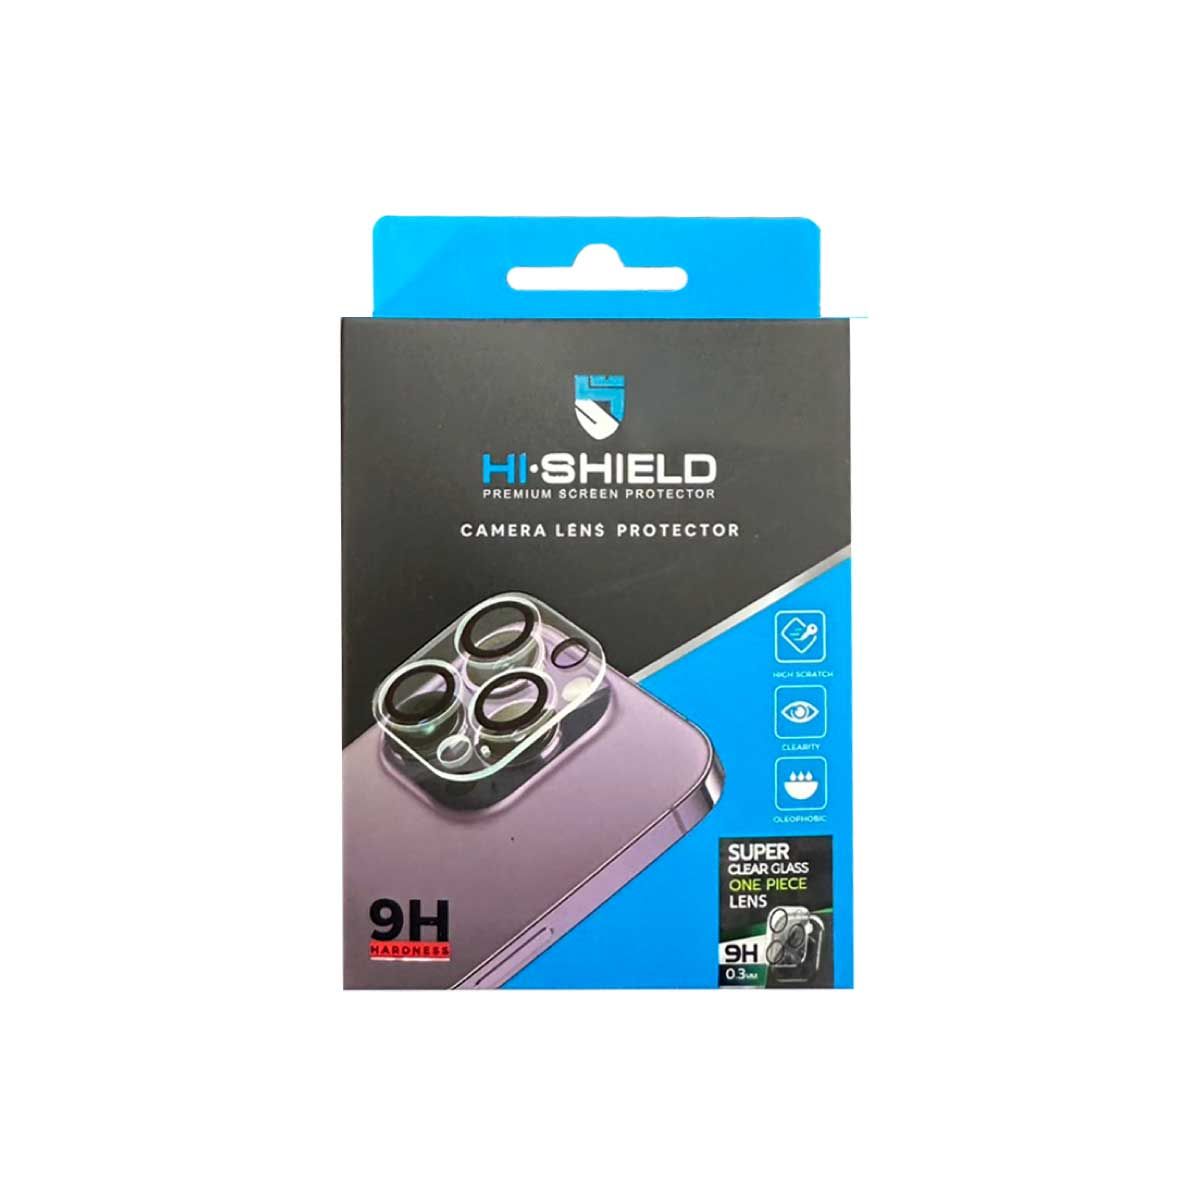 HI-SHIELD Box Set  iPhone15 (3DTS+LENS1+Crystal case+กระเป๋า)